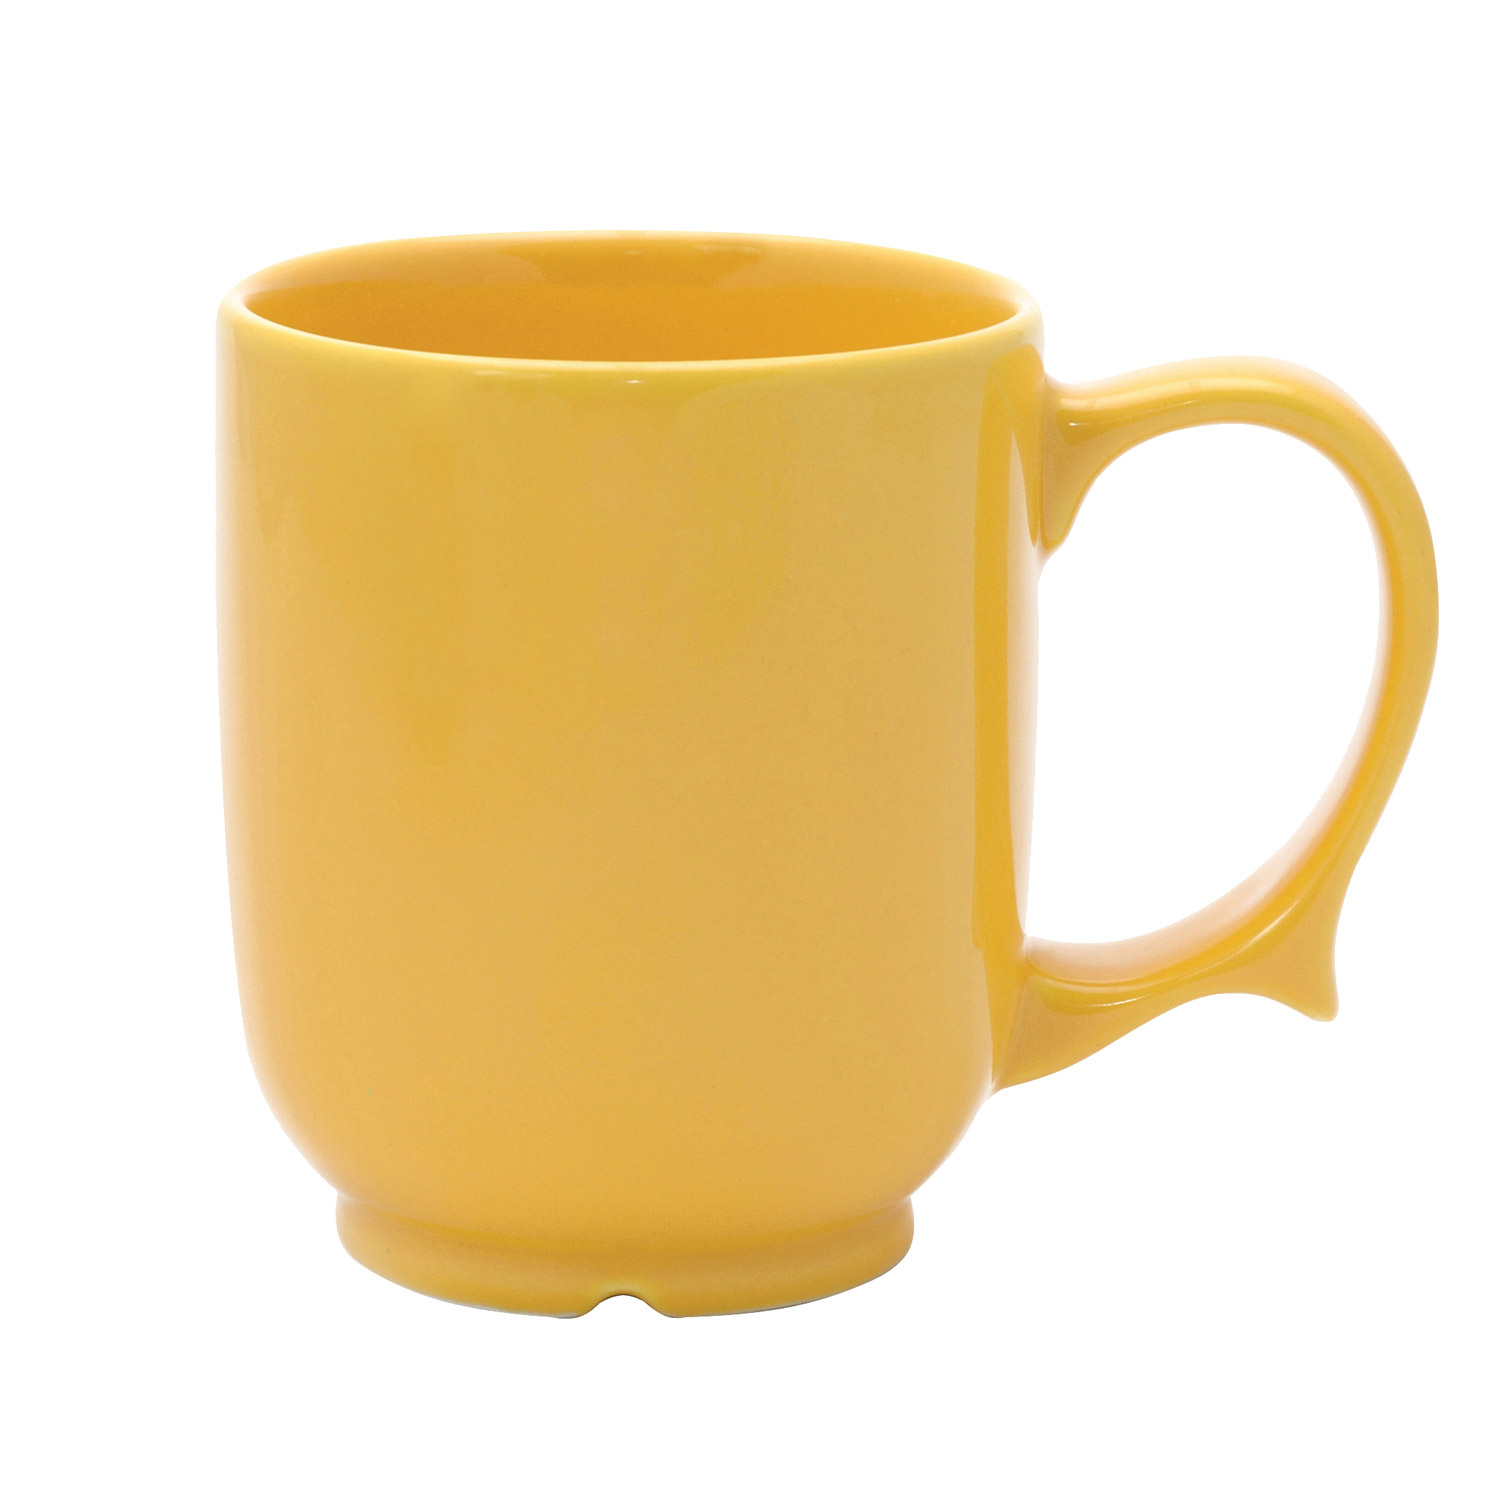 Dignity - One Handled Ceramic Mug - 250ml - Yellow